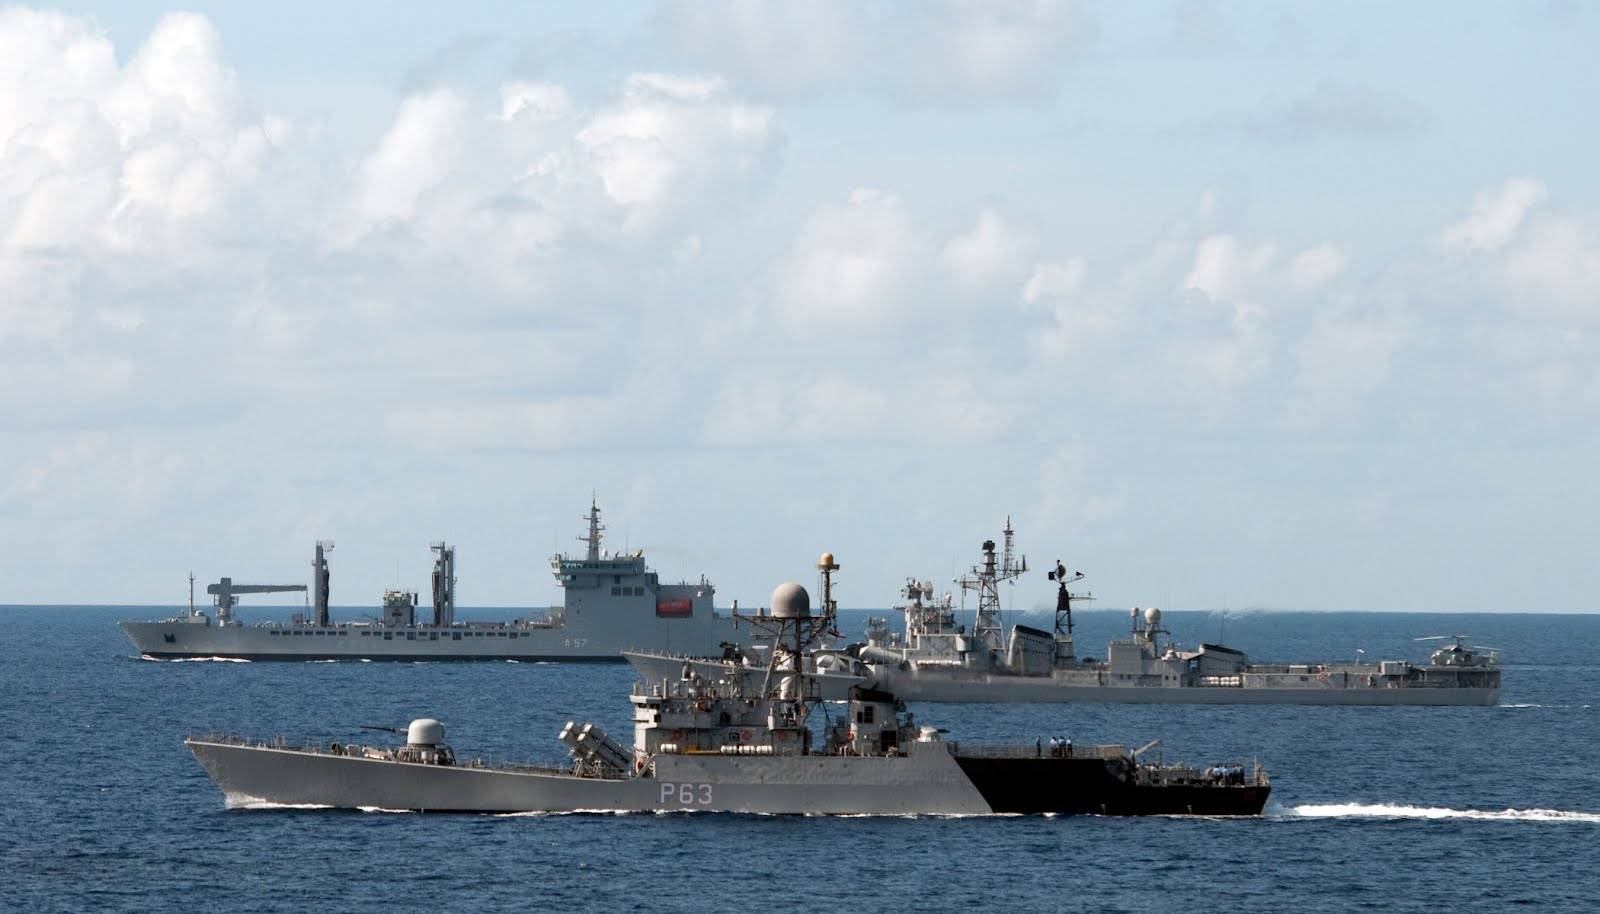 http://3.bp.blogspot.com/-aLt2tm9R4X0/T4onLTGQCDI/AAAAAAAAKvE/qjBj5-KtmTM/s1600/indigenously+built+guided+missile+frigate+INS+Satpura,+guided+missile+destroyers+INS+Ranvijay+and+INS+Ranvir+and+fleet+tanker+INS+Shakti.++aircraft+carrier+USS+Carl+Vinson+Indo-US+military+exercise+%27Malabar%27+2012+(1).jpg